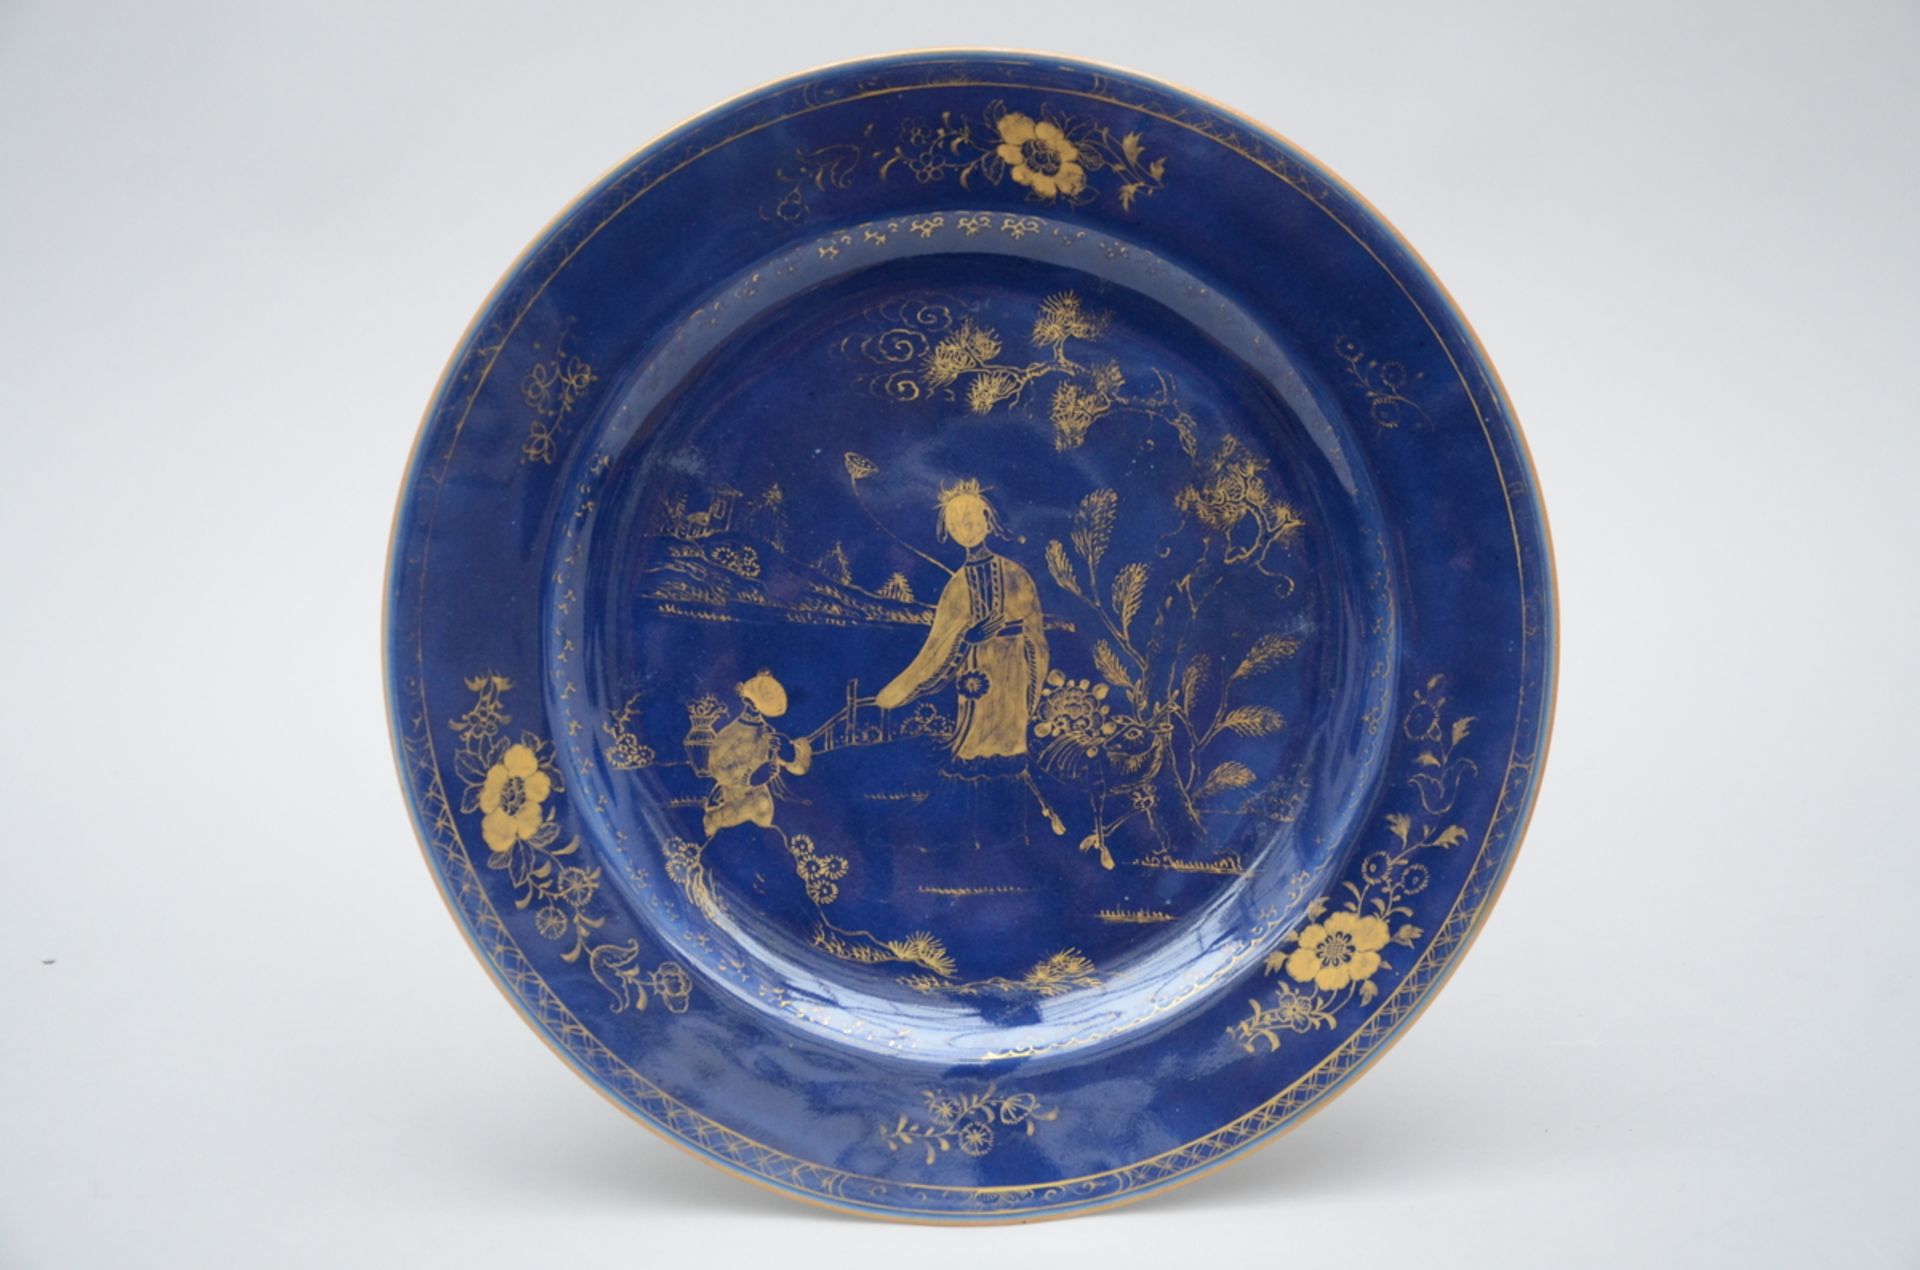 A dish in Chinese 'bleu poudré' porcelain, 18th century (dia 32 cm)